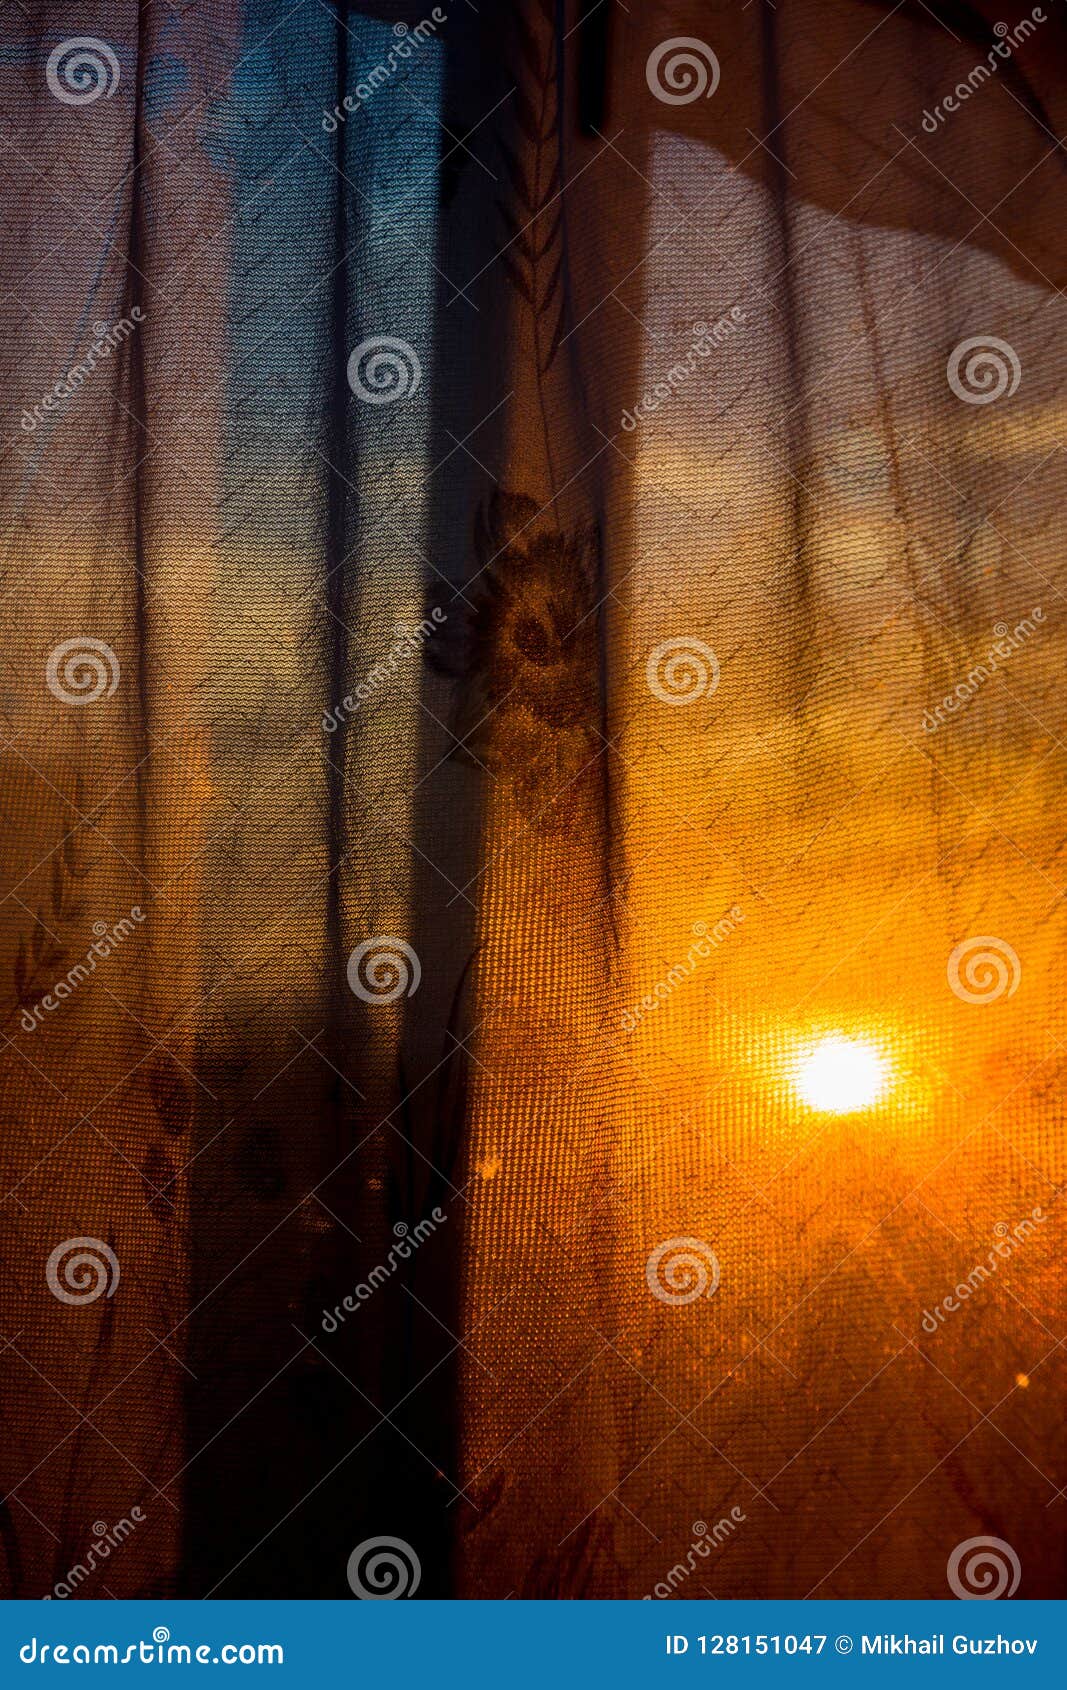 through the curtain shines the setting sun